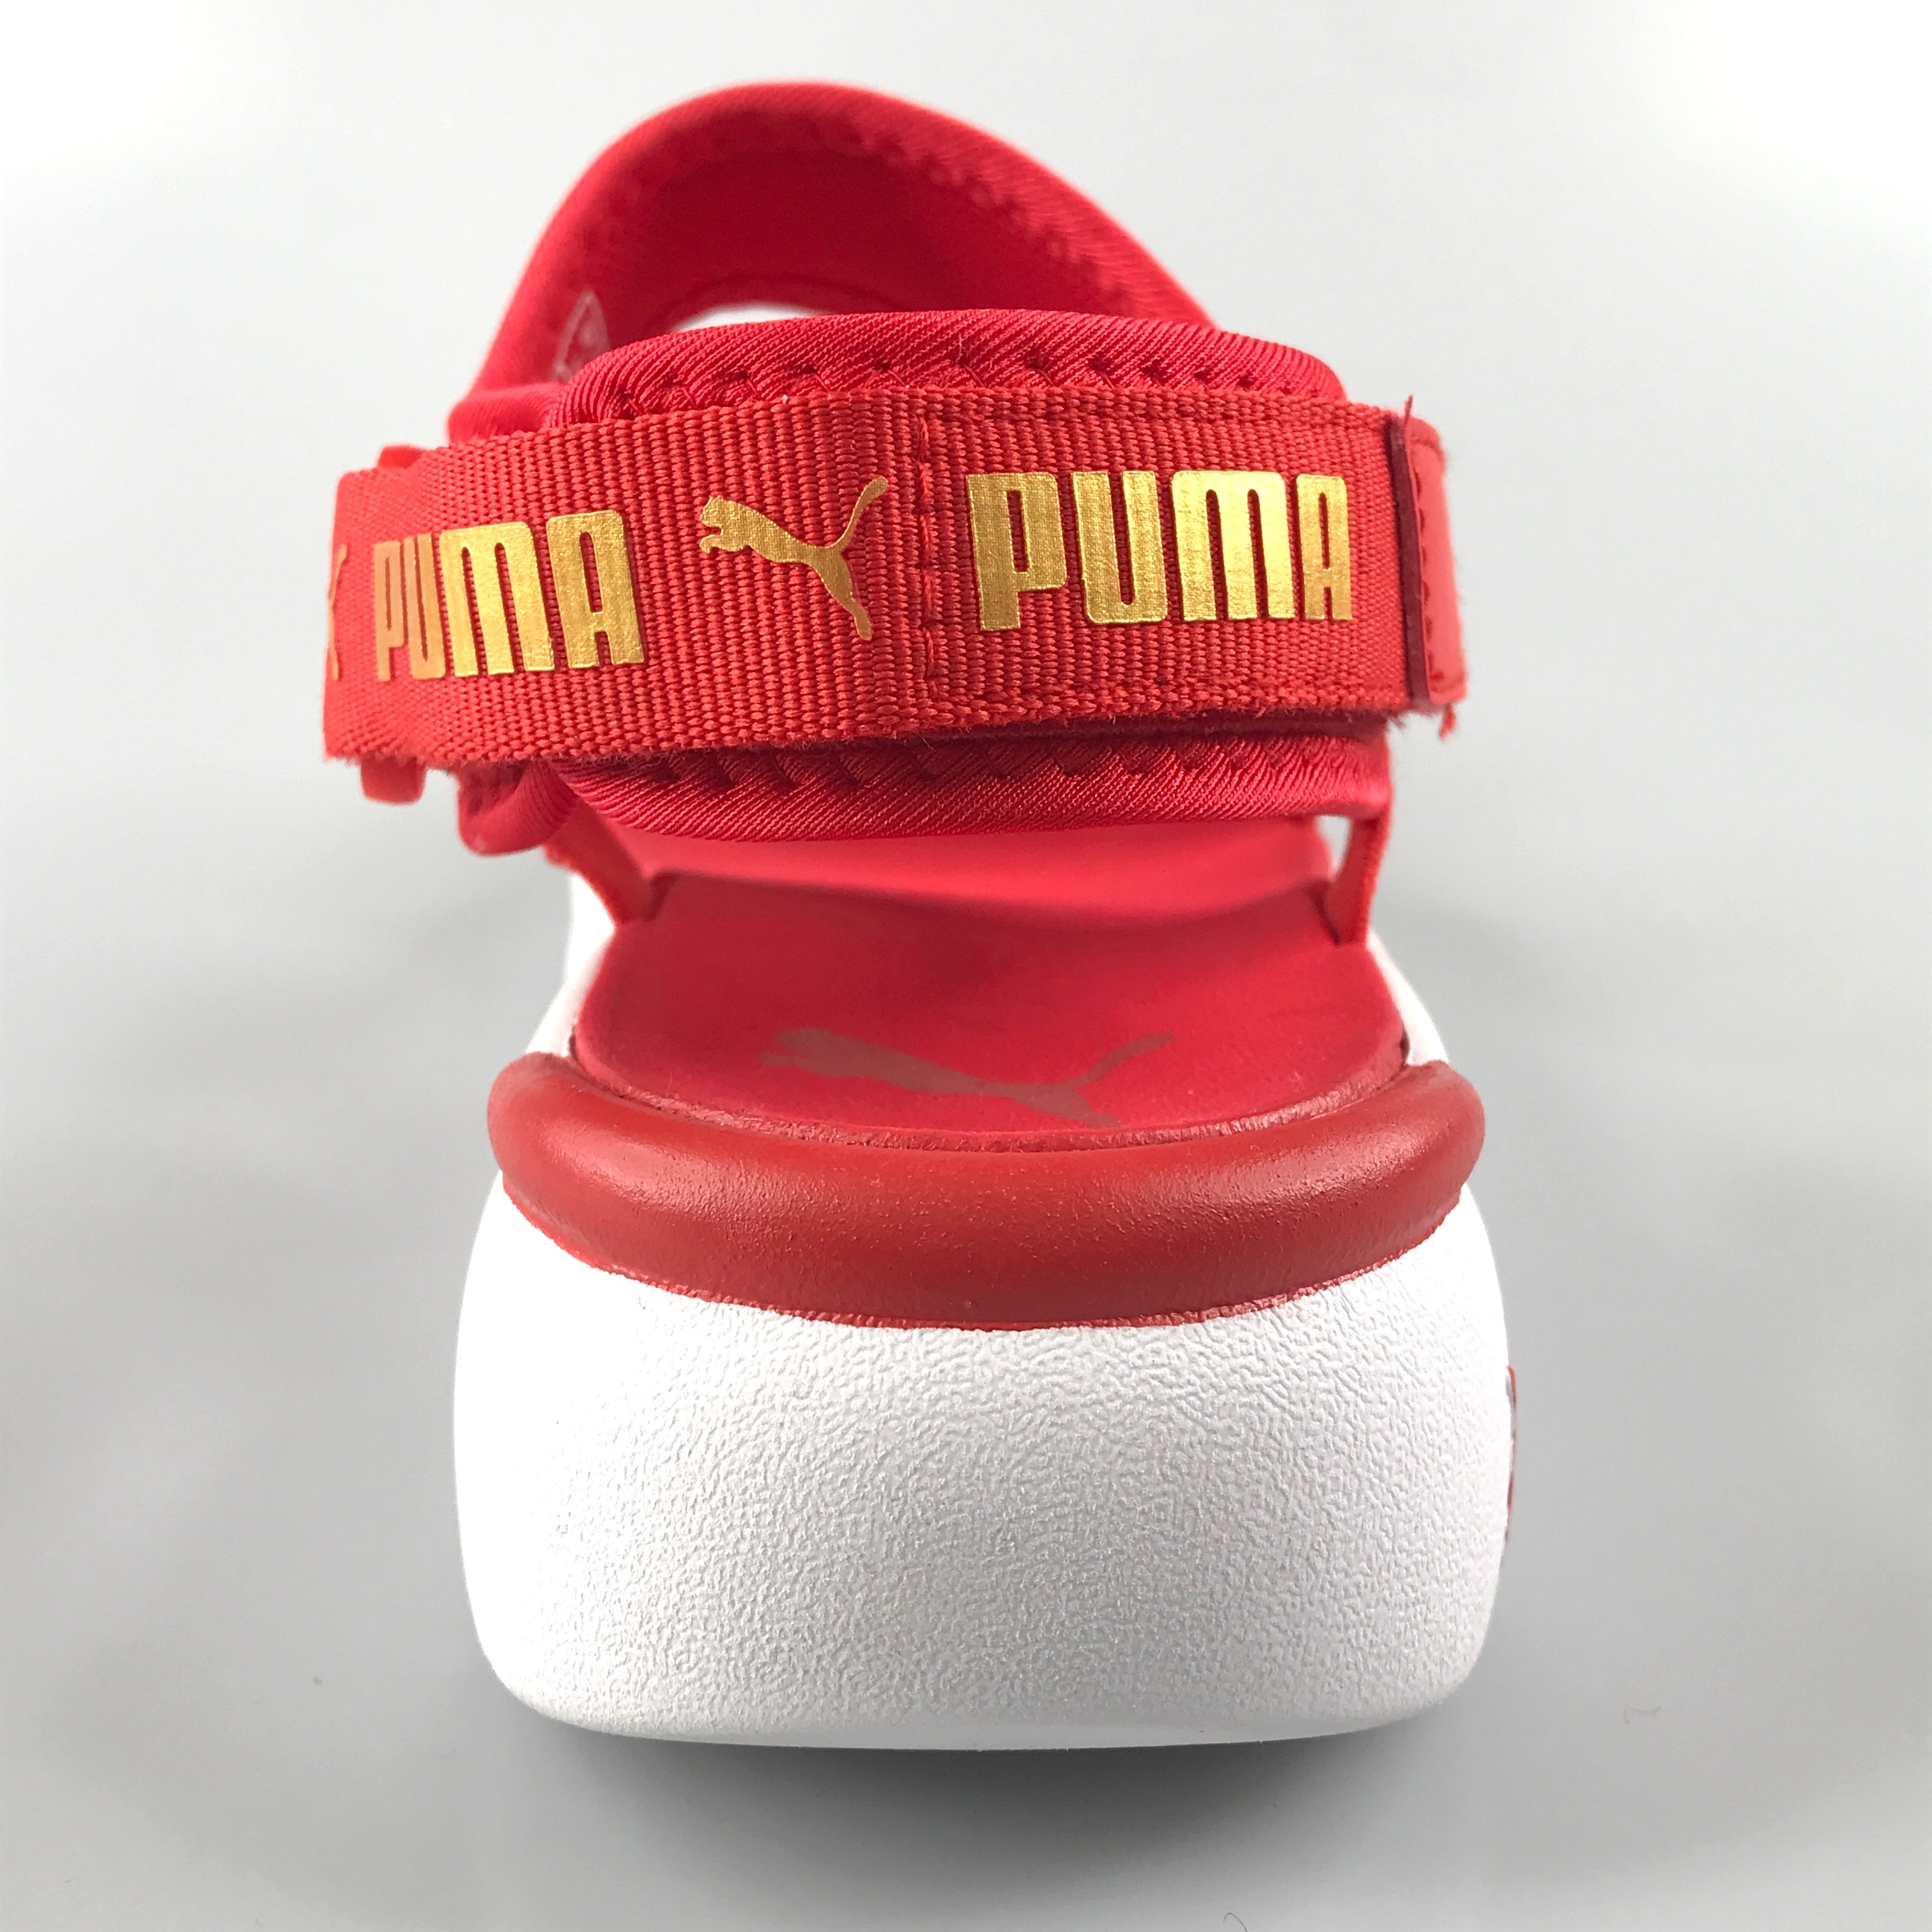 Puma Sportie Sandal Wn’s in poppy red-white